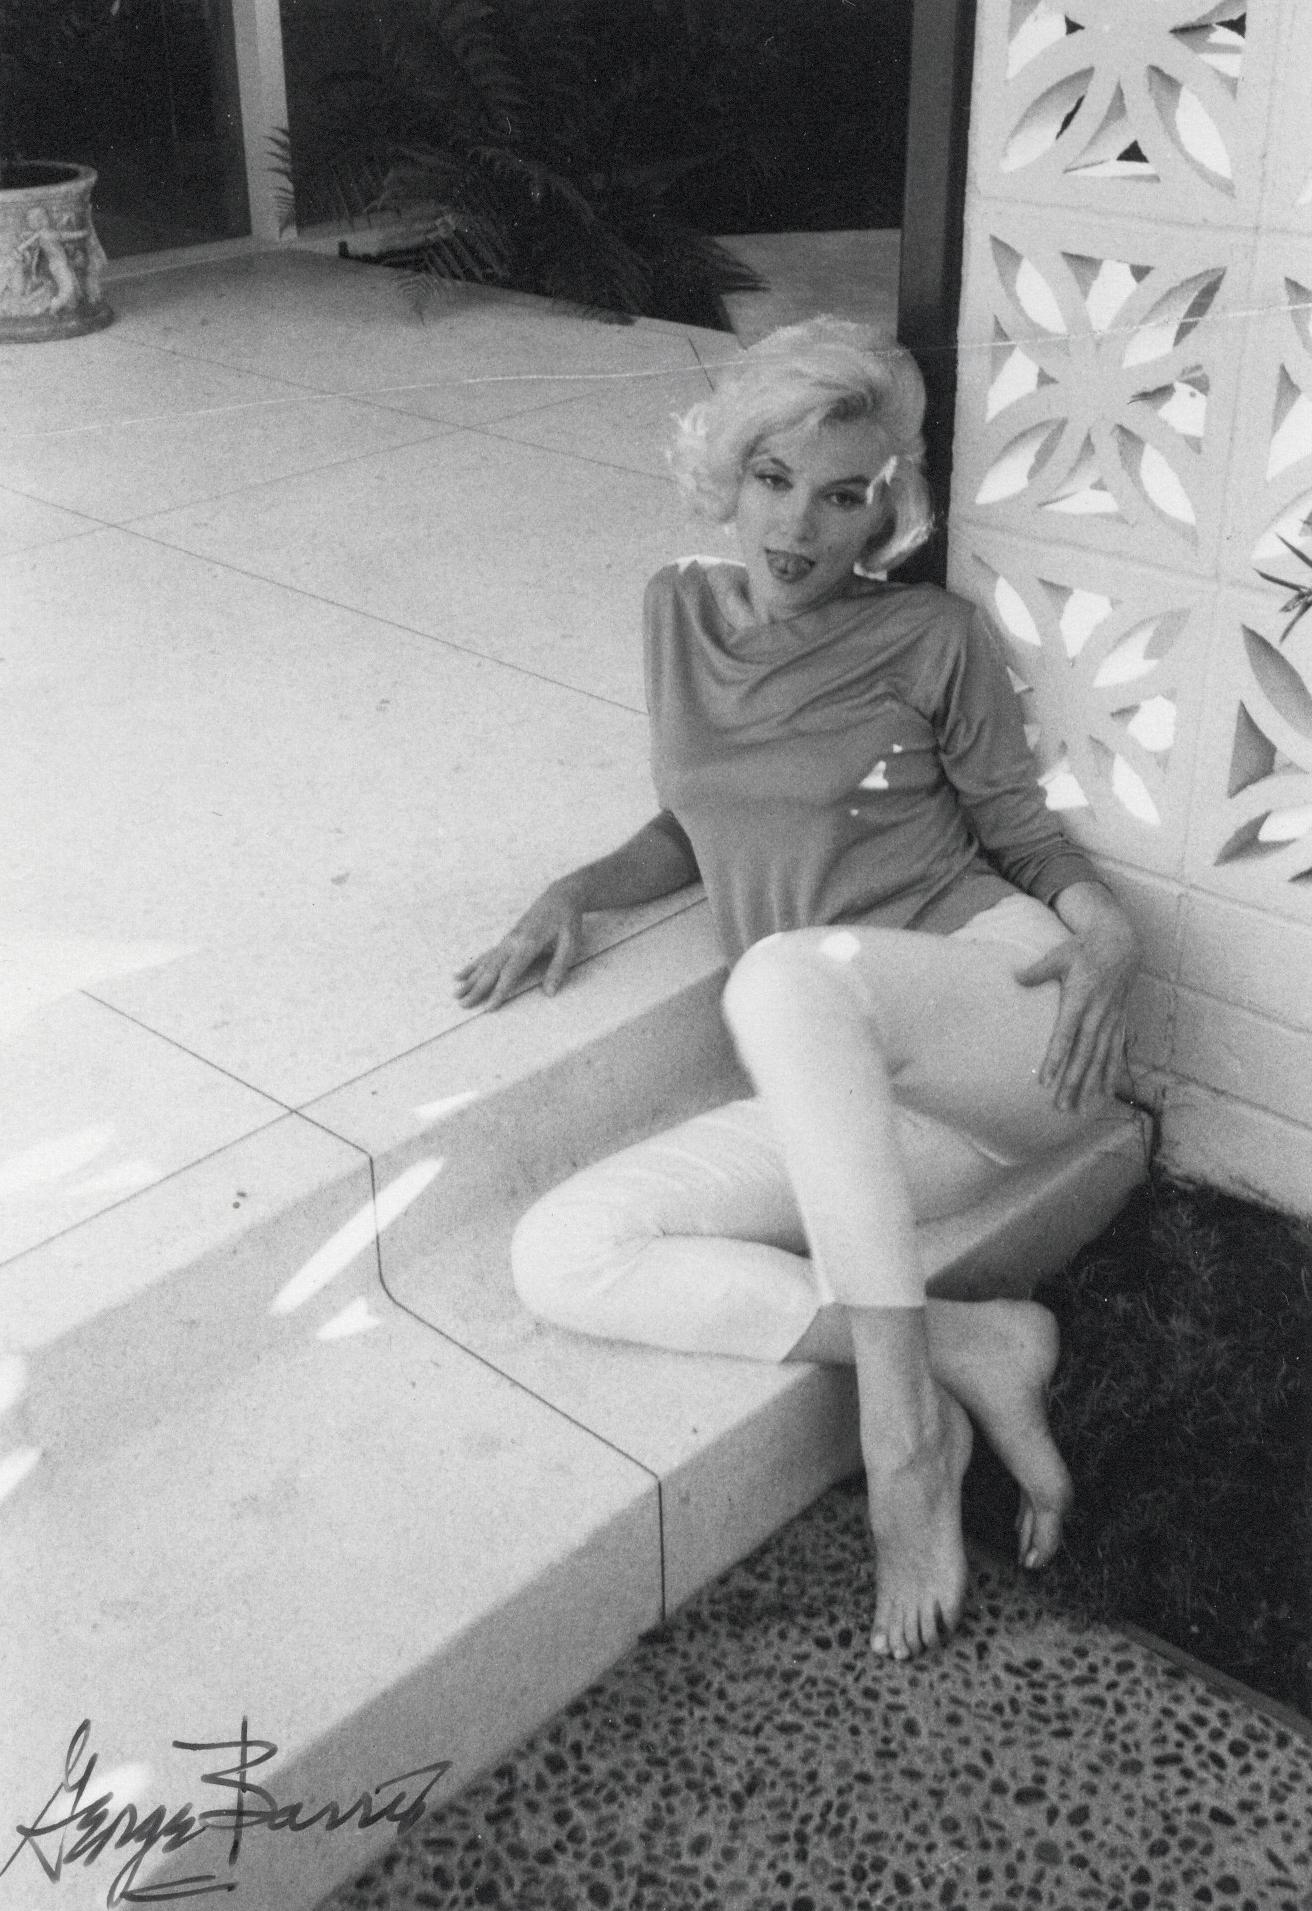 George Barris Marilyn Monroe Barefoot Vintage Original Photograph For Sale At Stdibs